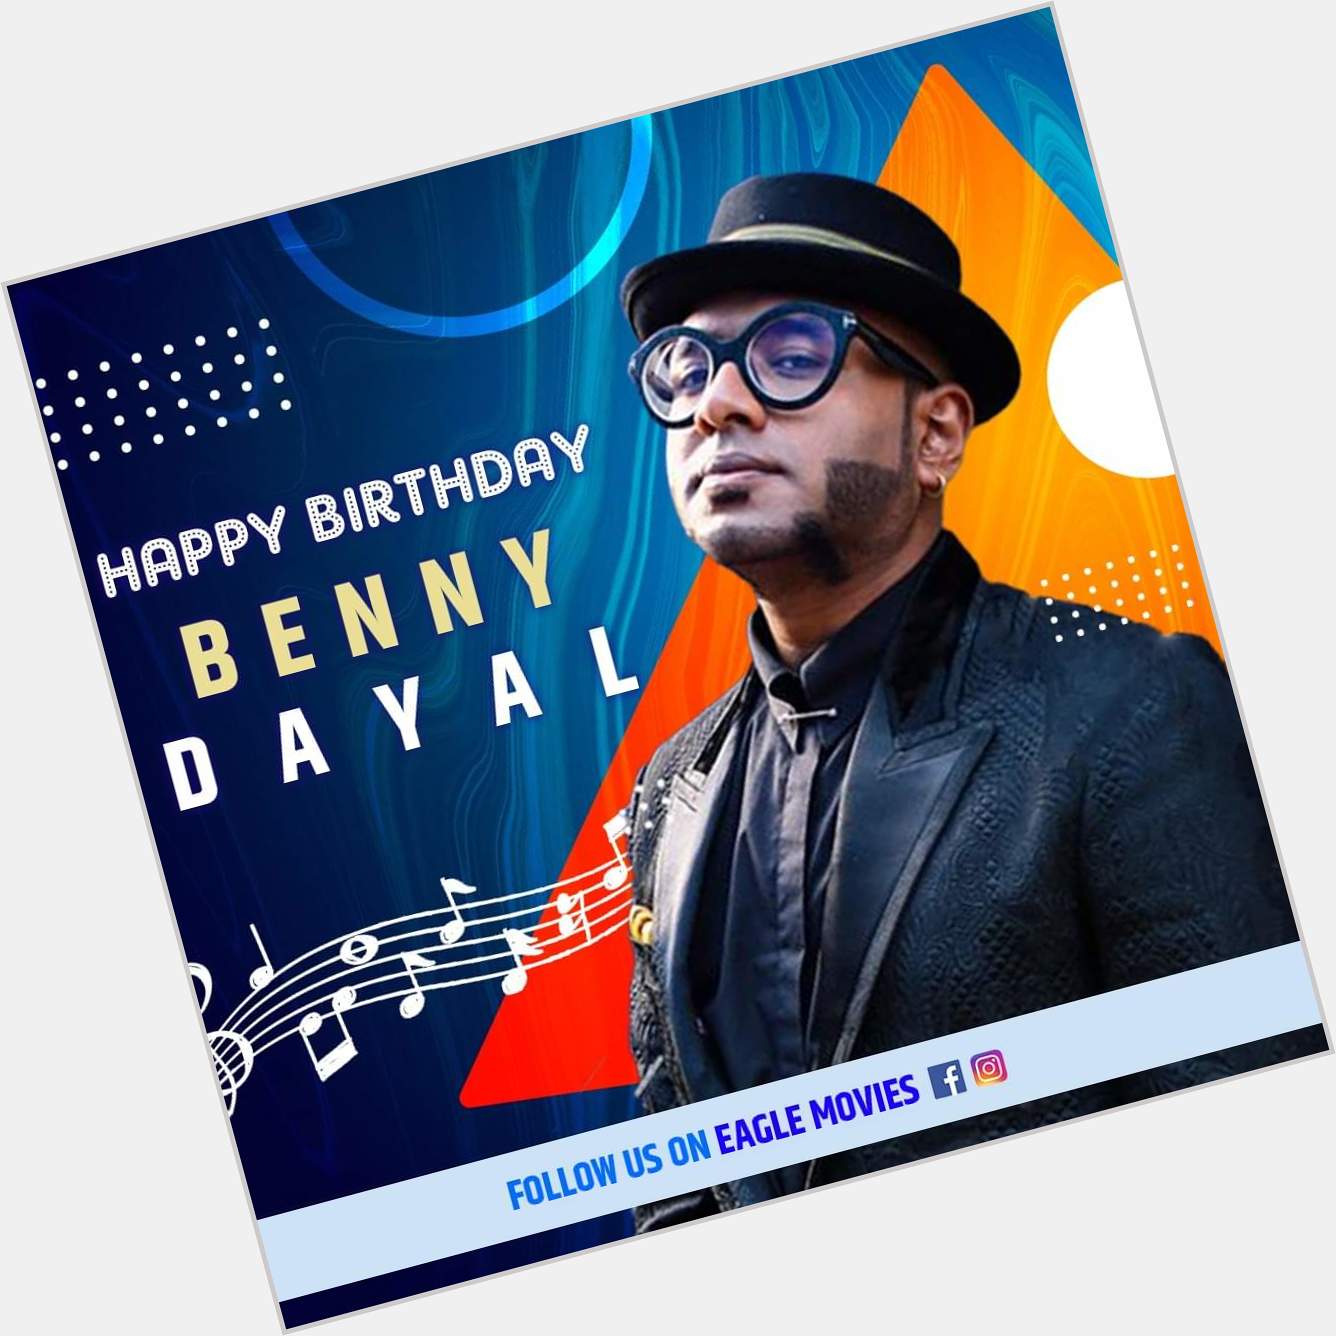 Happy Birthday Benny Dayal by Pradeep Madgaonkar    